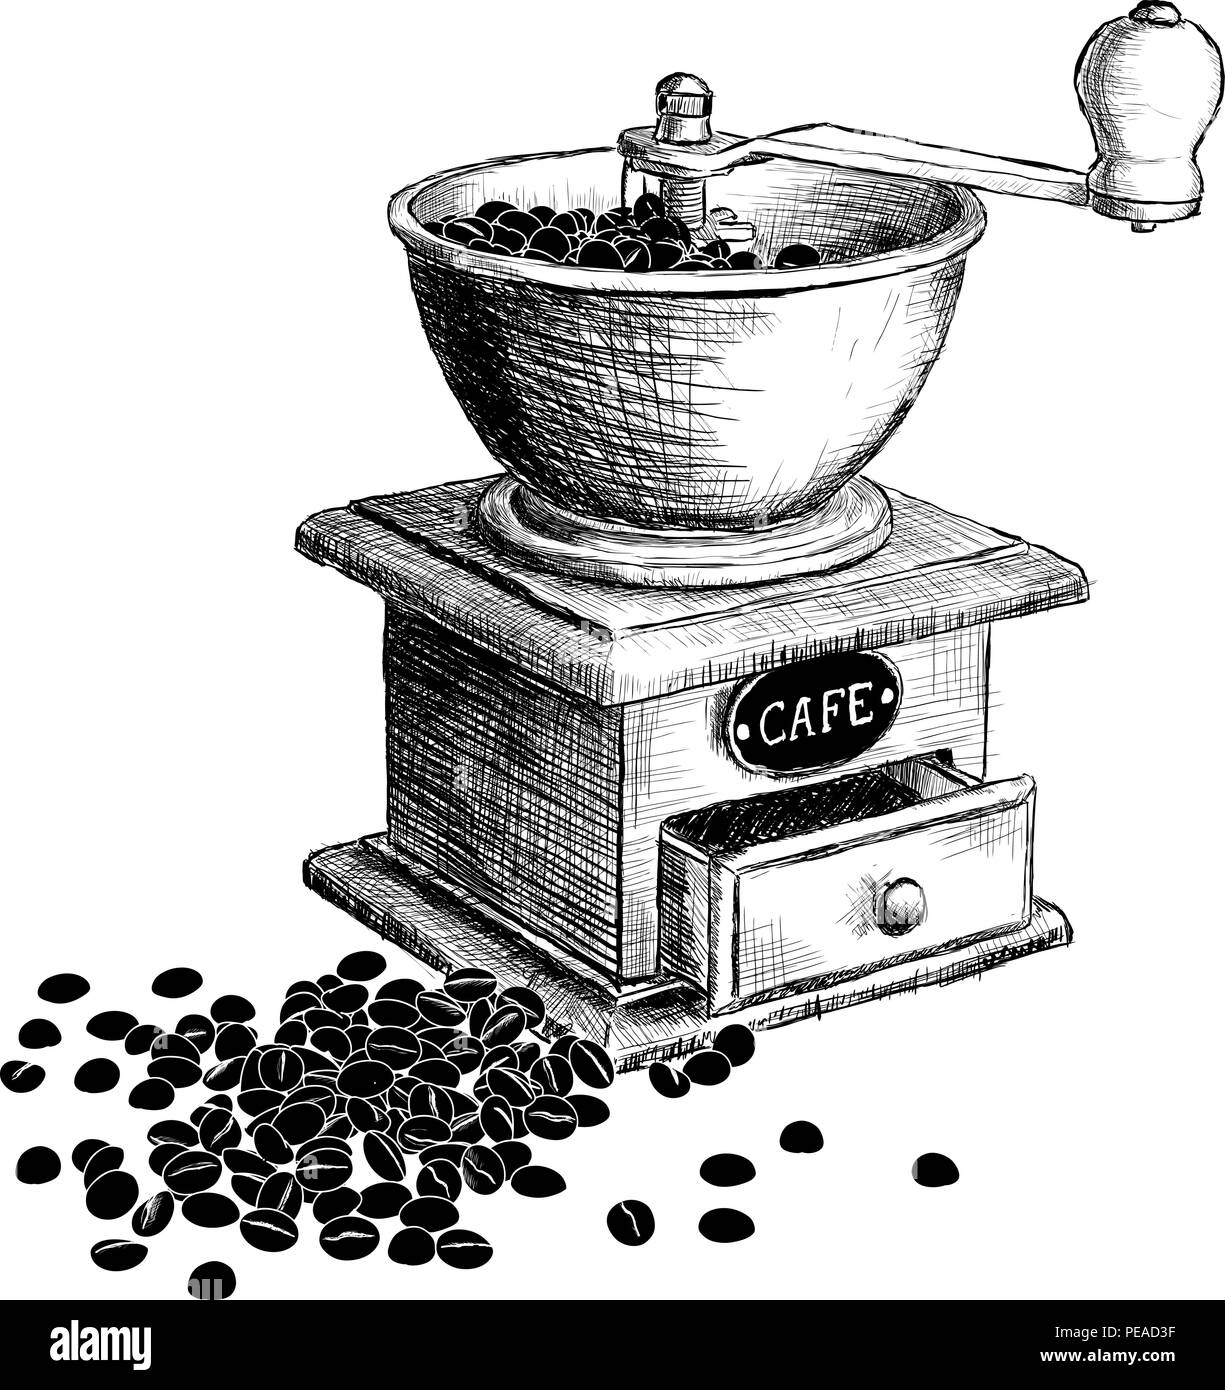 https://c8.alamy.com/comp/PEAD3F/coffee-mill-hand-drawn-illustration-PEAD3F.jpg